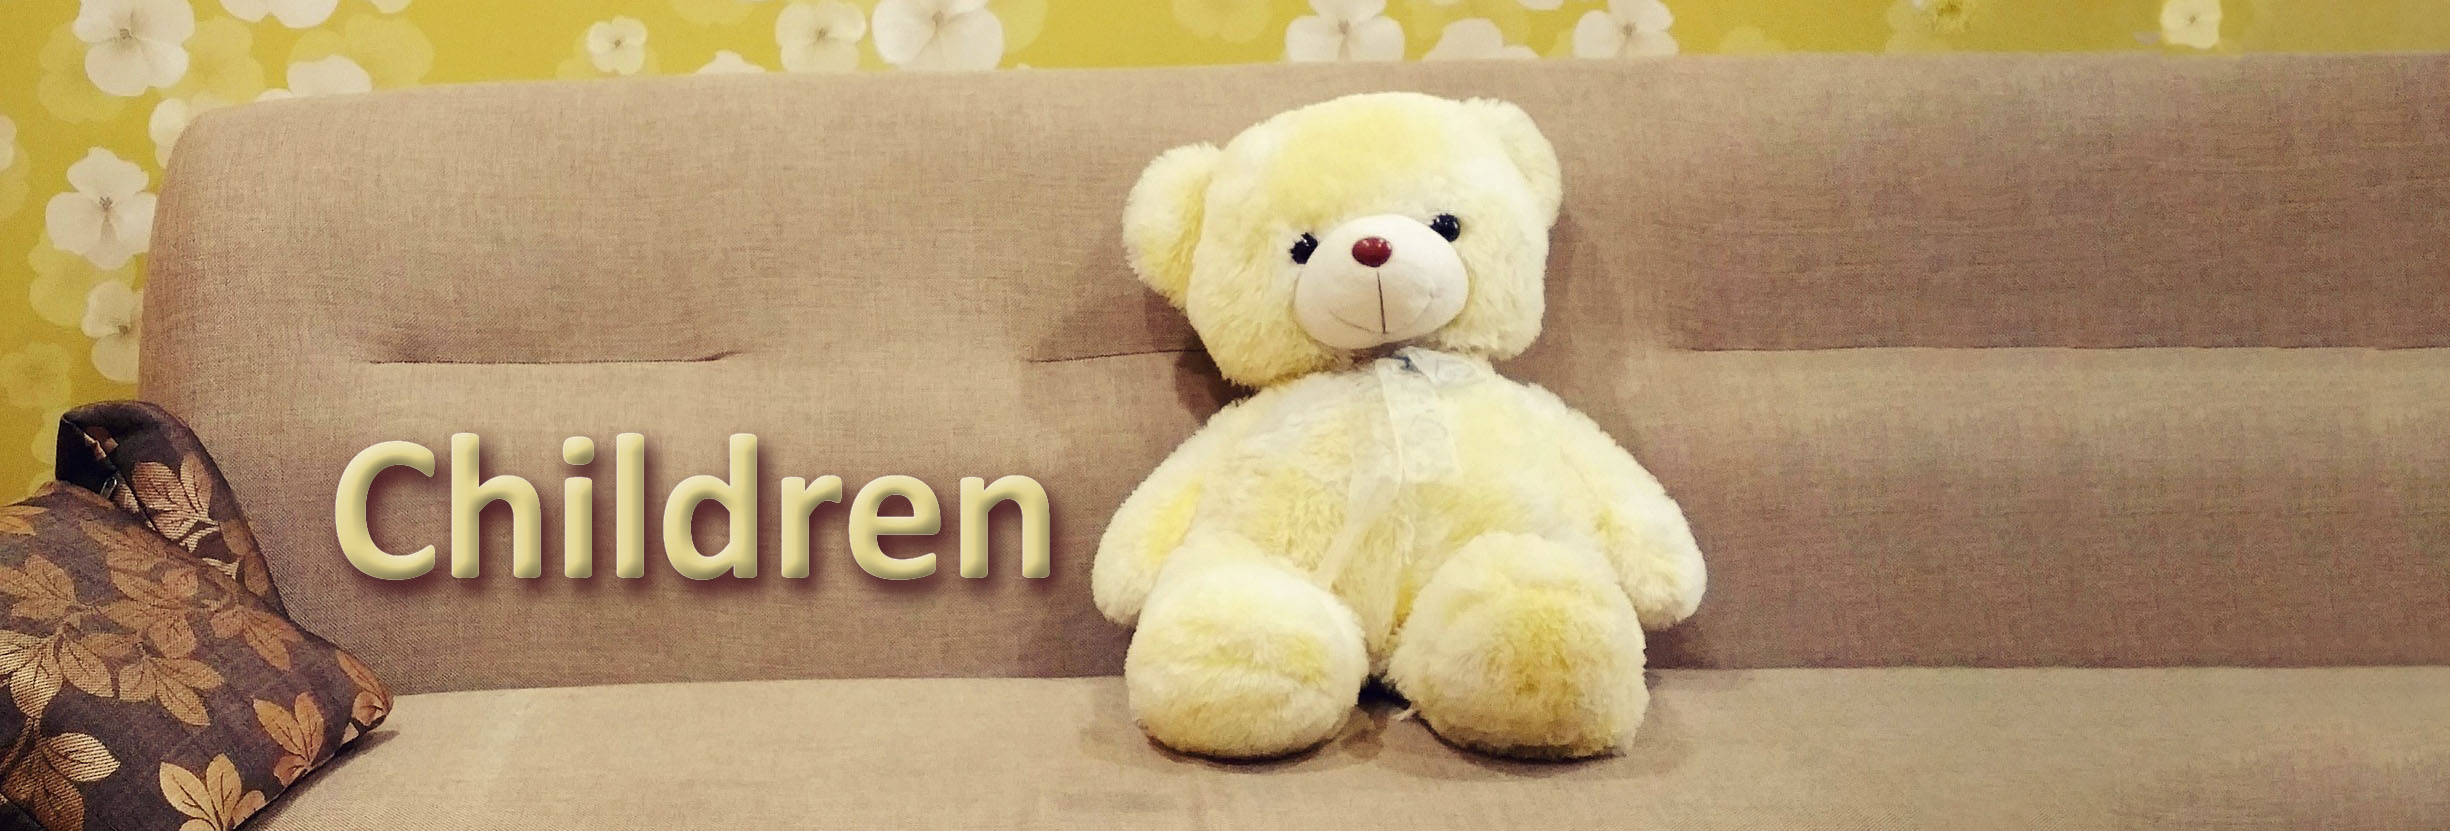 Teddy_Bear_on_Sofa_-_Children.jpg